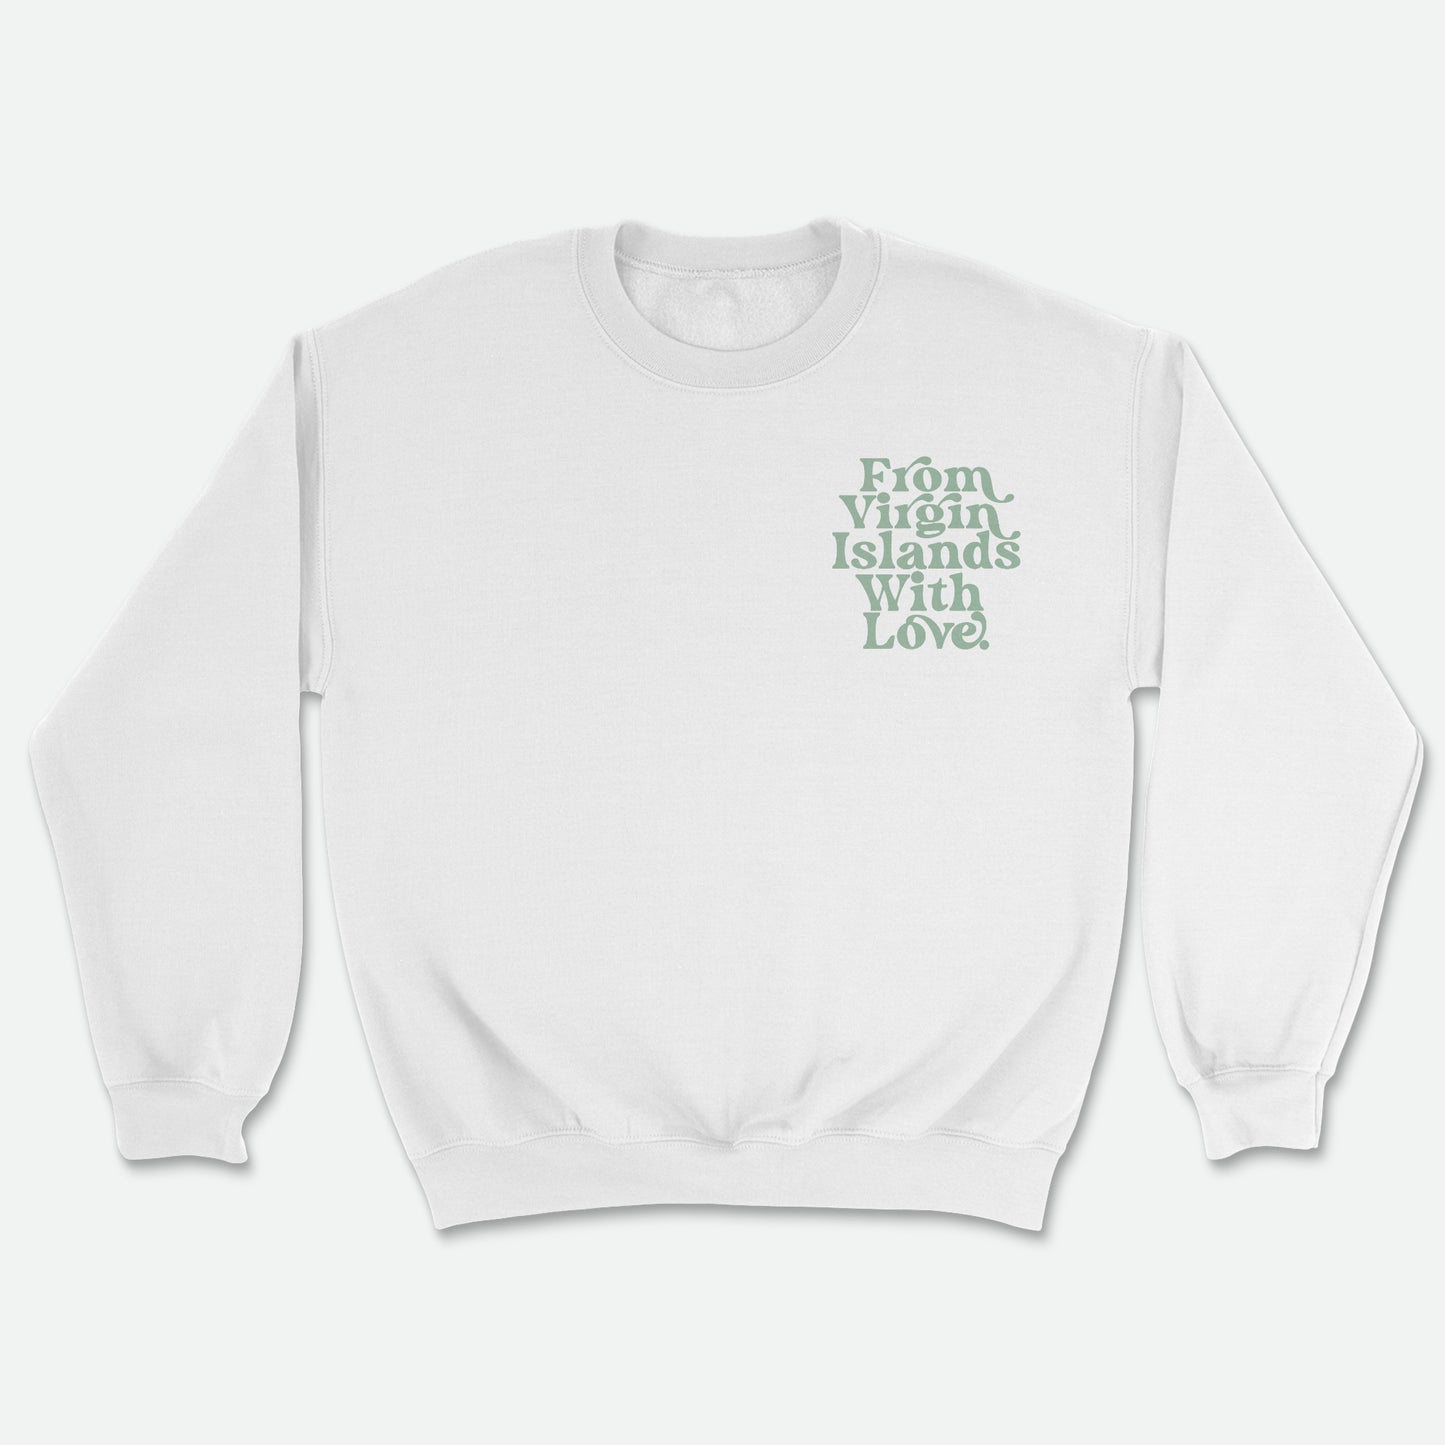 From Virgin Islands With Love Sweatshirt (Mint Print)